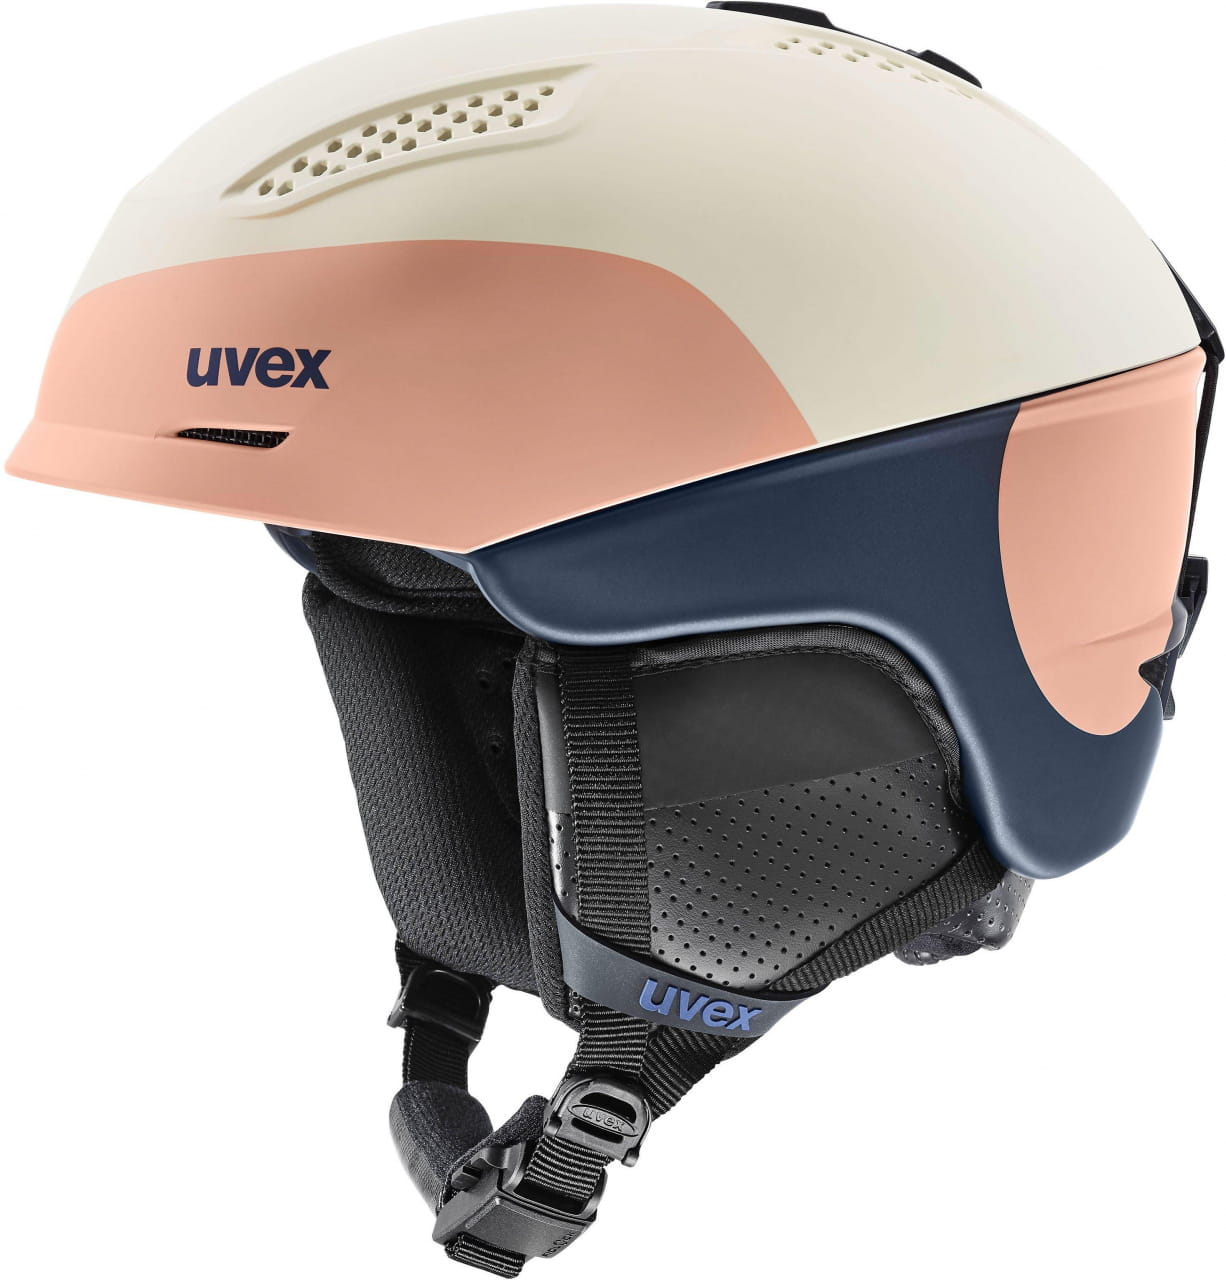 Damen-Skihelm Uvex Ultra Pro W